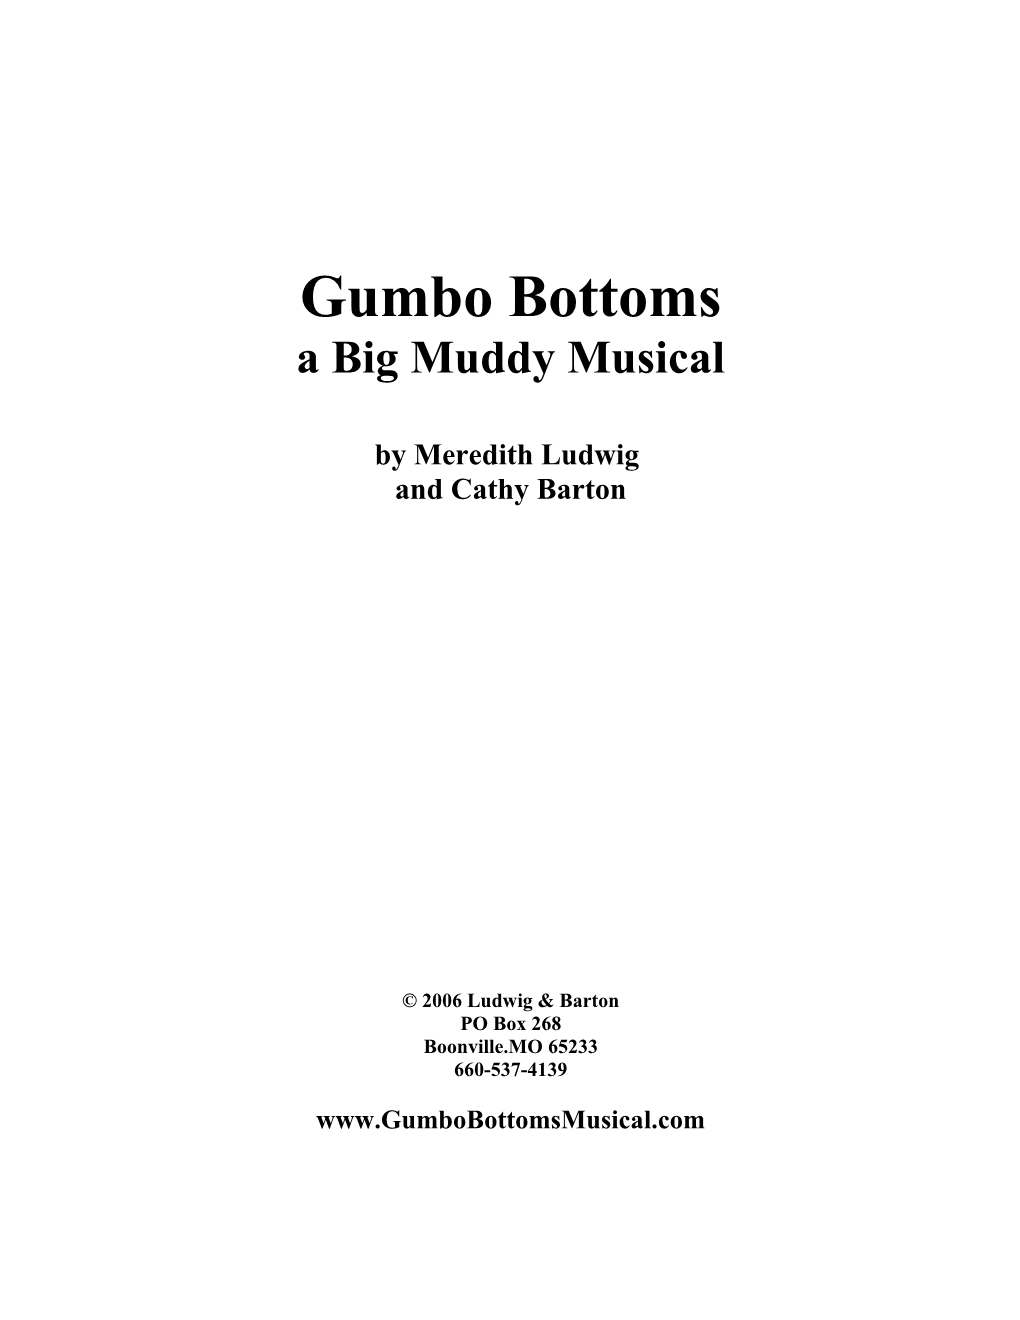 A Big Muddy Musical